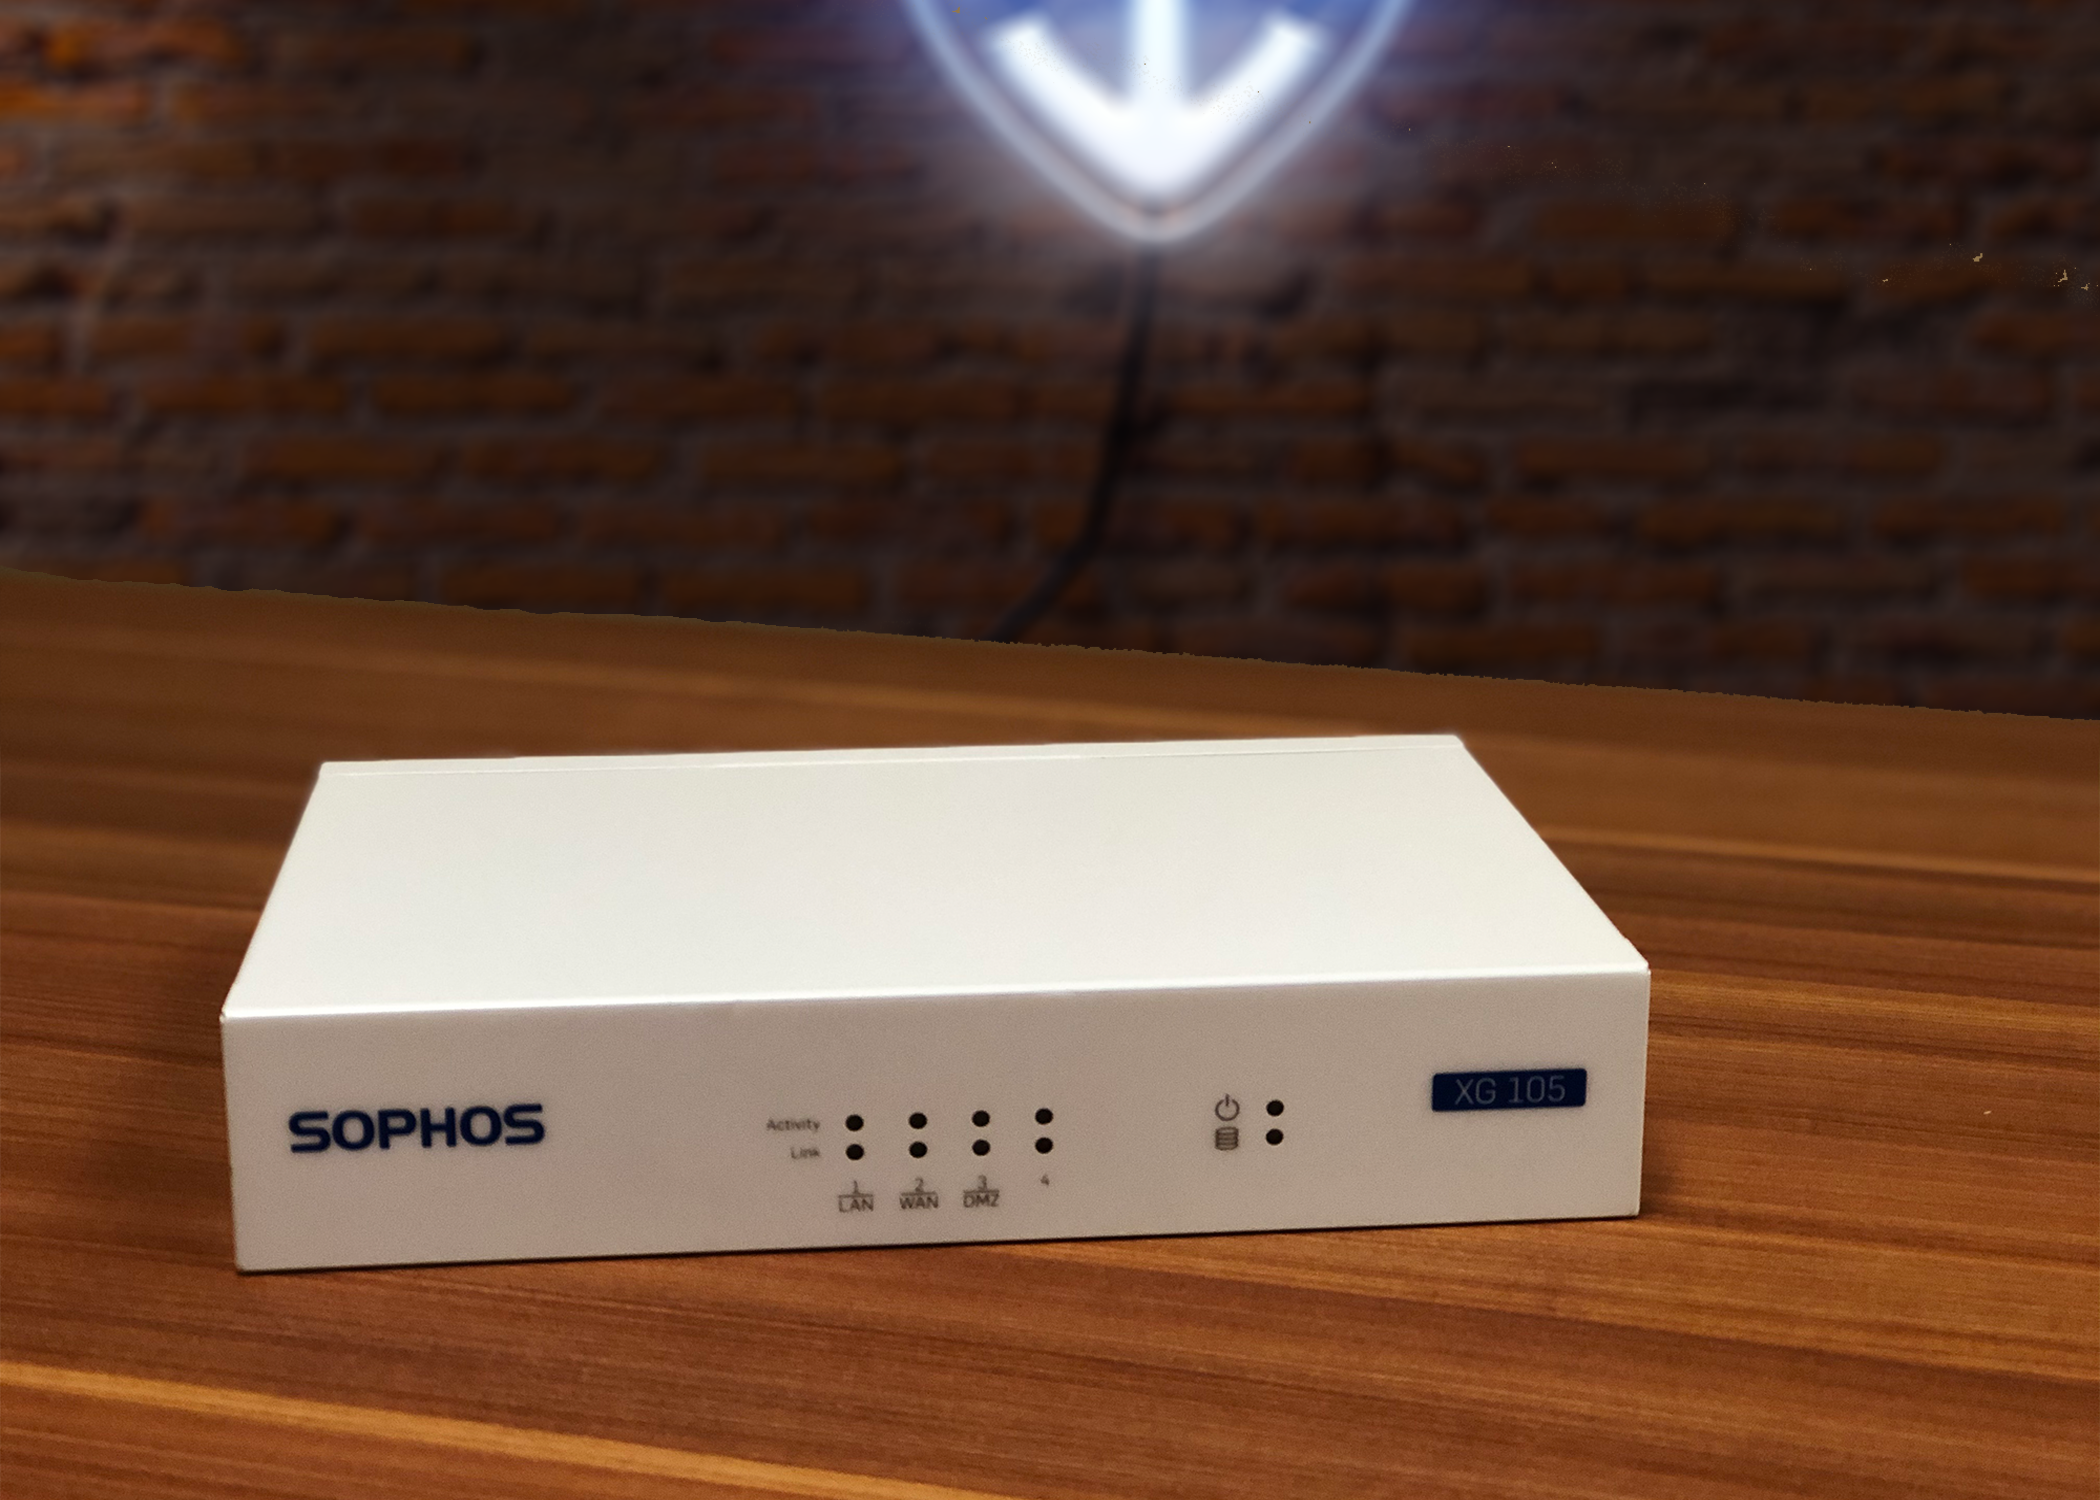 Sophos XG 105 – Small But Powerful